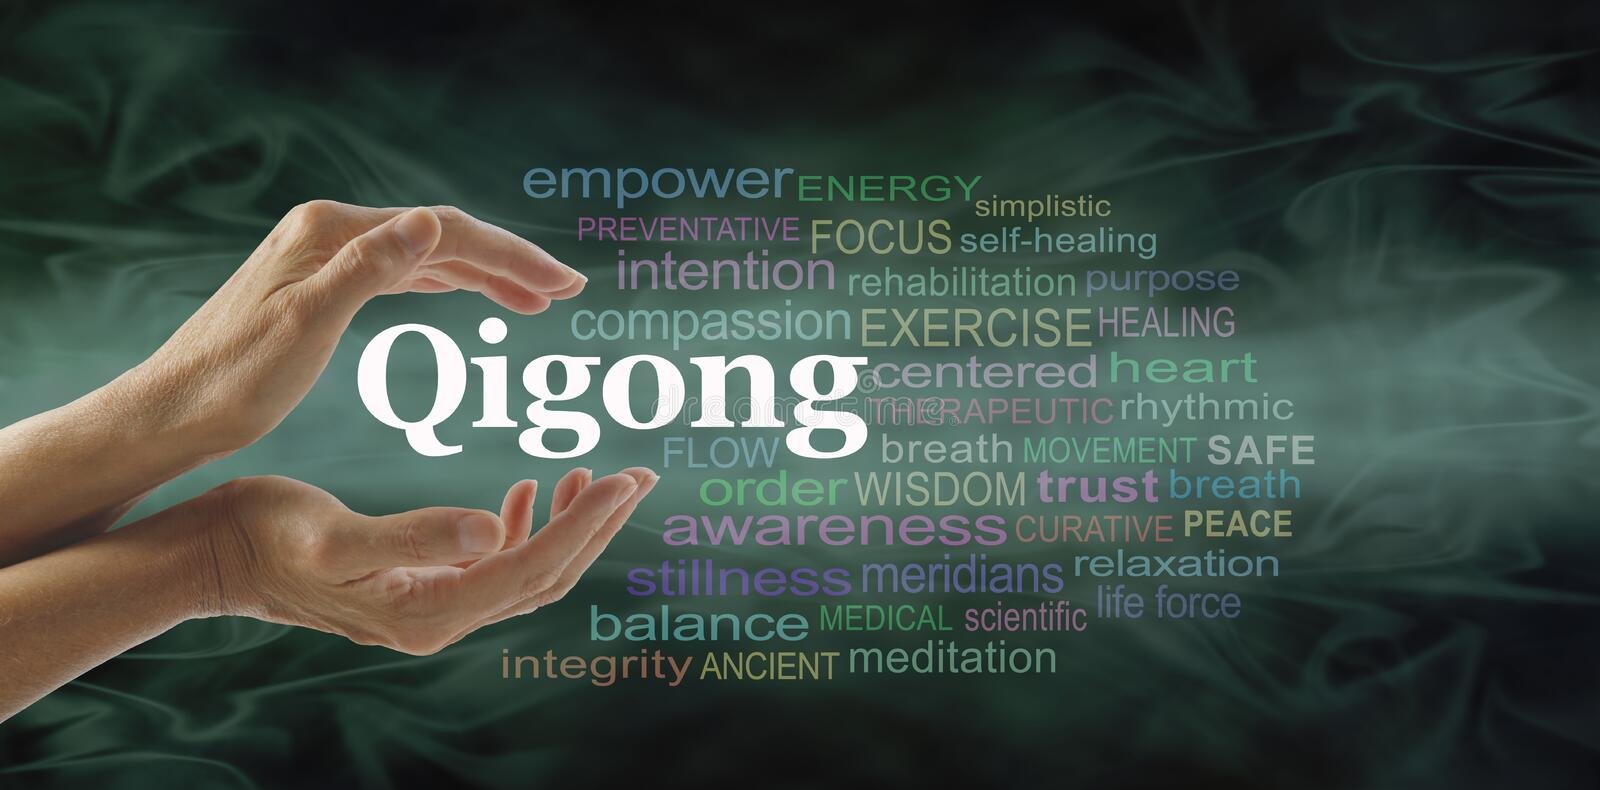 Qigong amplifies work life